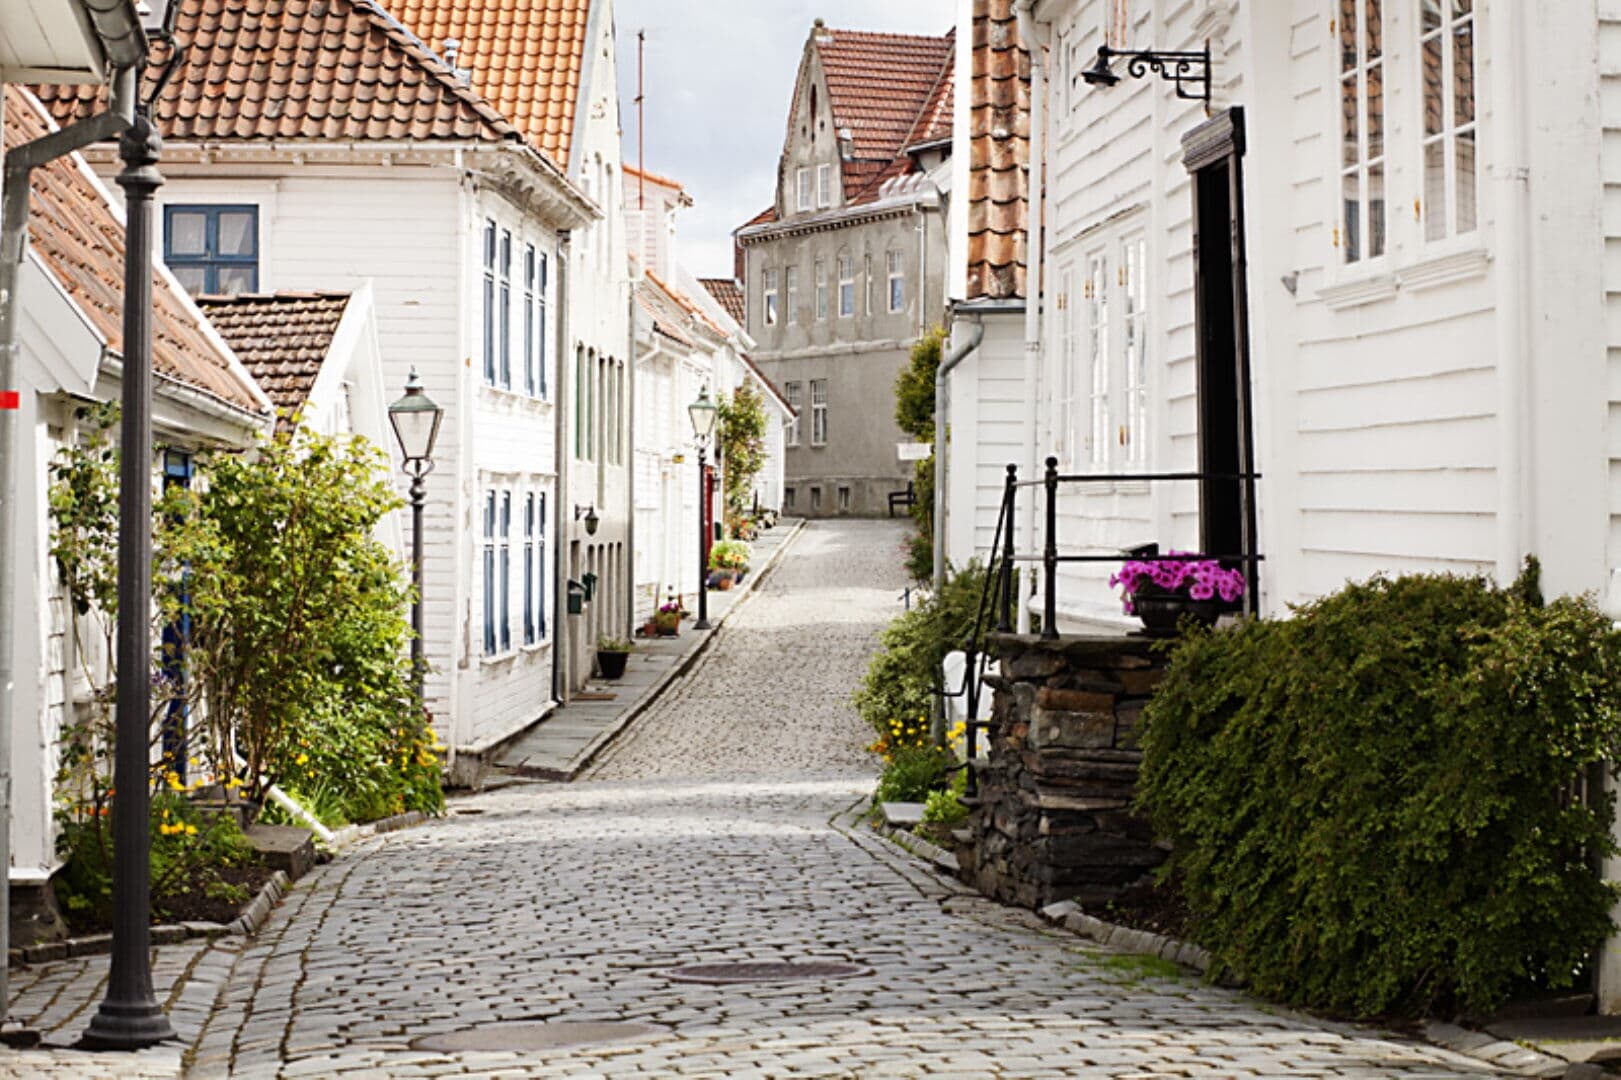 Stavanger photo